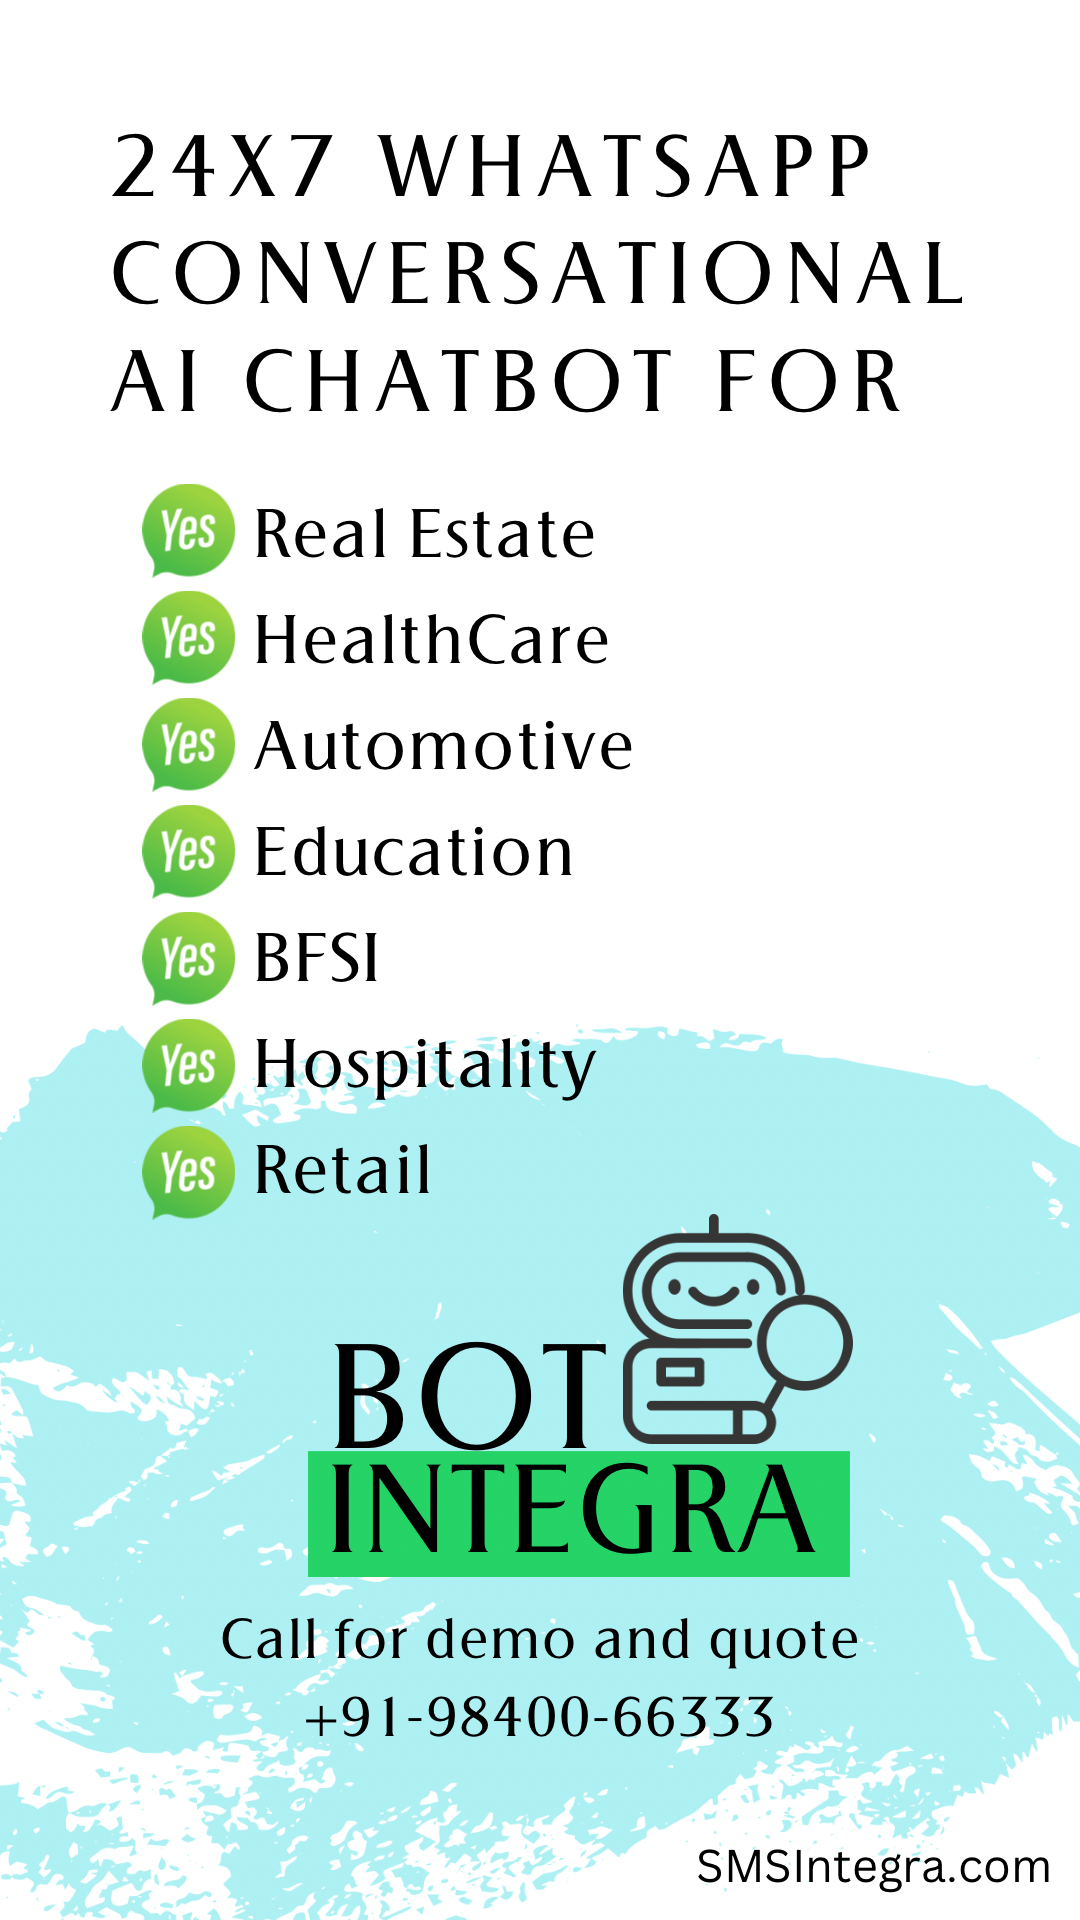 BotIntegra - AI-Powered Chatbots